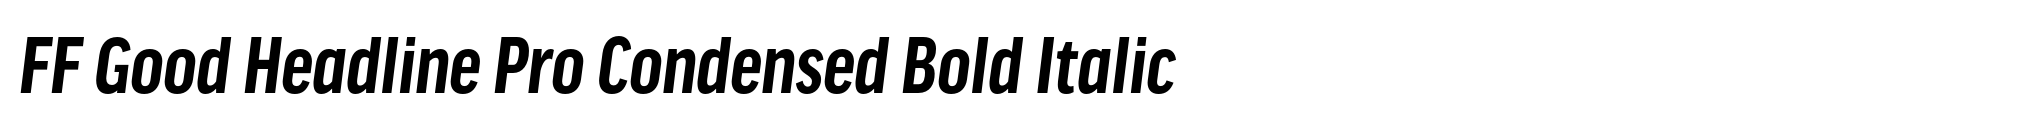 FF Good Headline Pro Condensed Bold Italic image